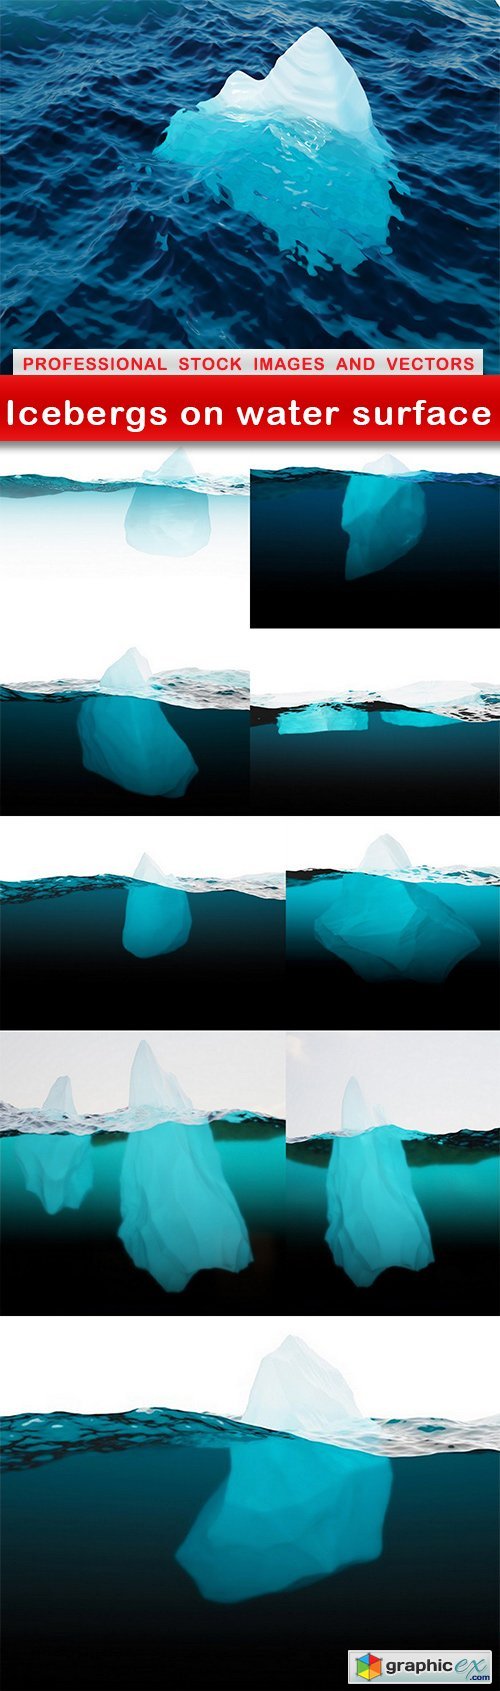 Icebergs on water surface - 10 UHQ JPEG